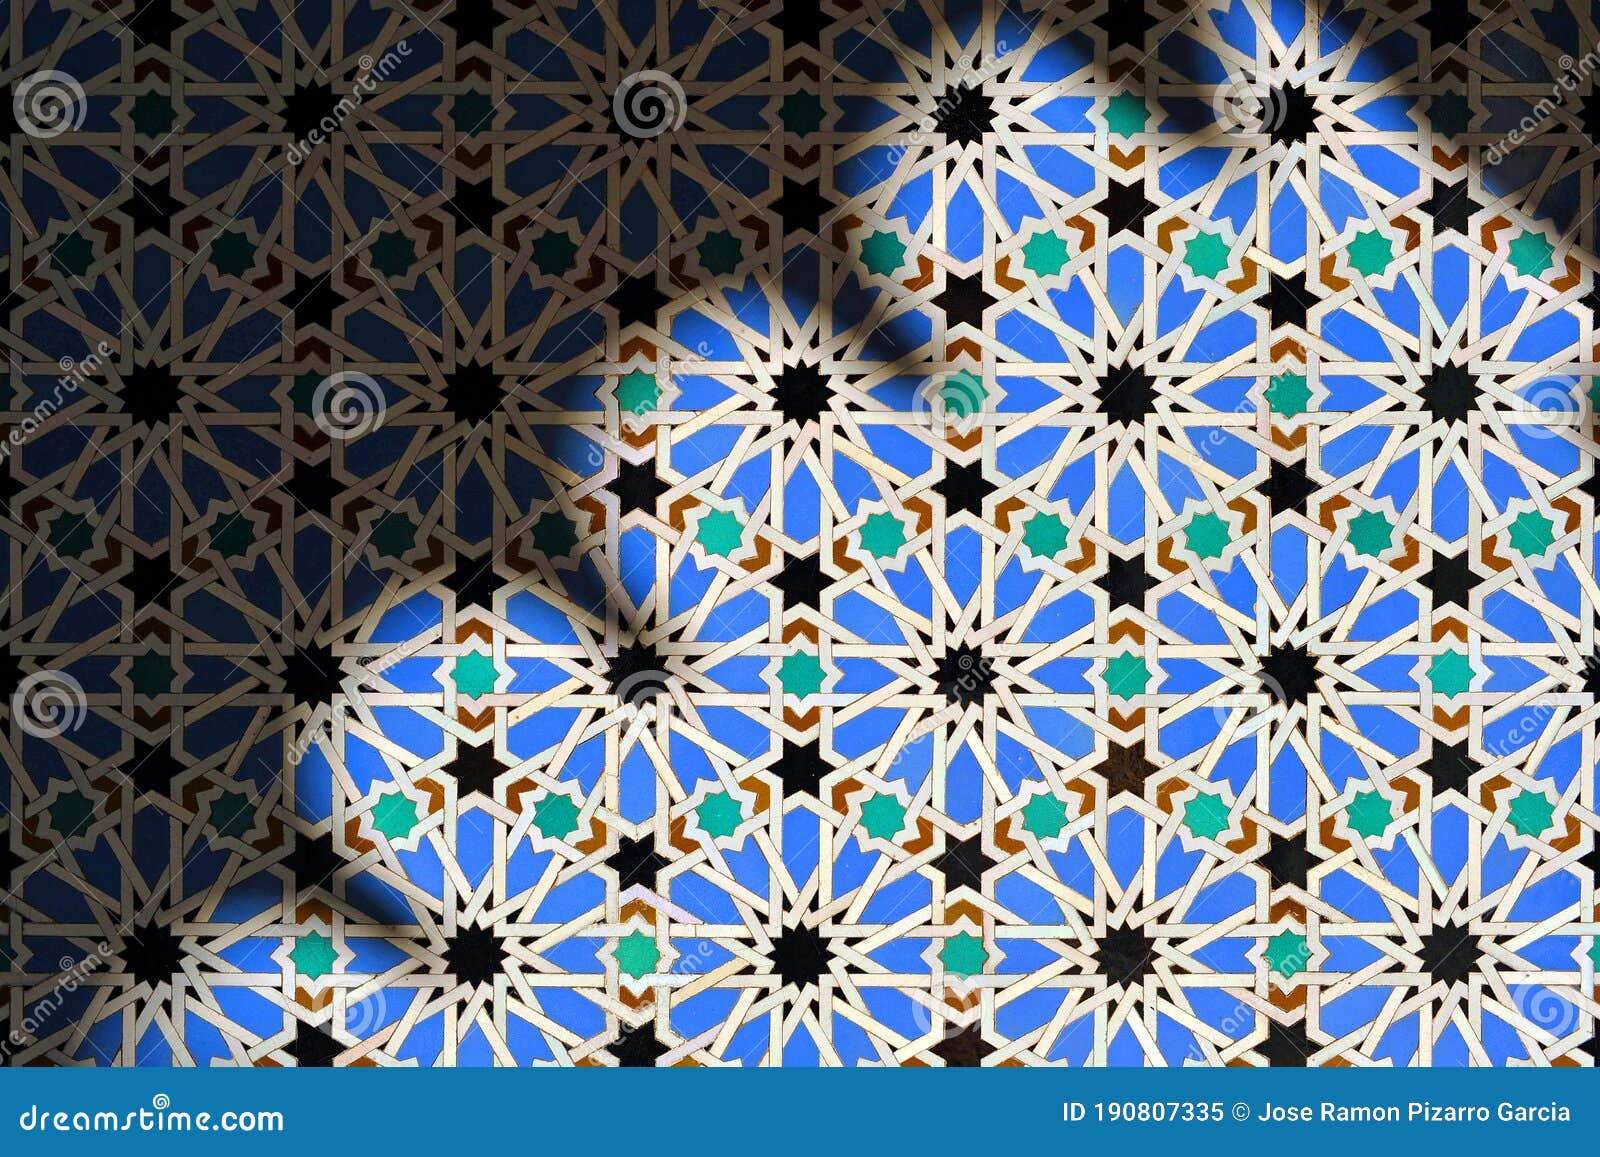 tiles of al andalus alcazar of seville spain. arab pattern decoration